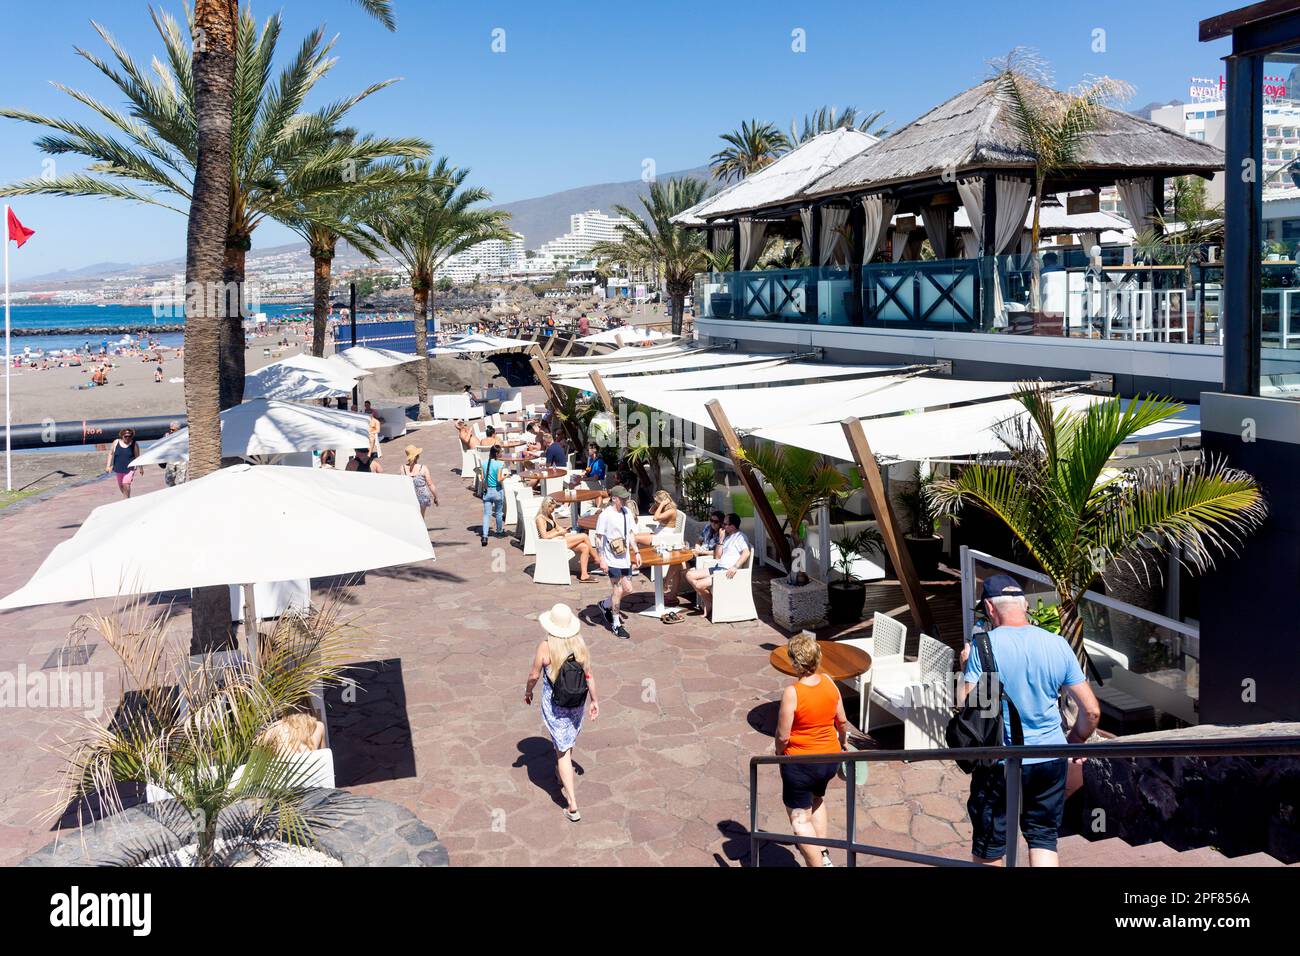 Papagayo Beach Club, Avenue Rafael Puig Lluvina, Playa de las Américas, Tenerife, Canary Islands, Kingdom of Spain Stock Photo